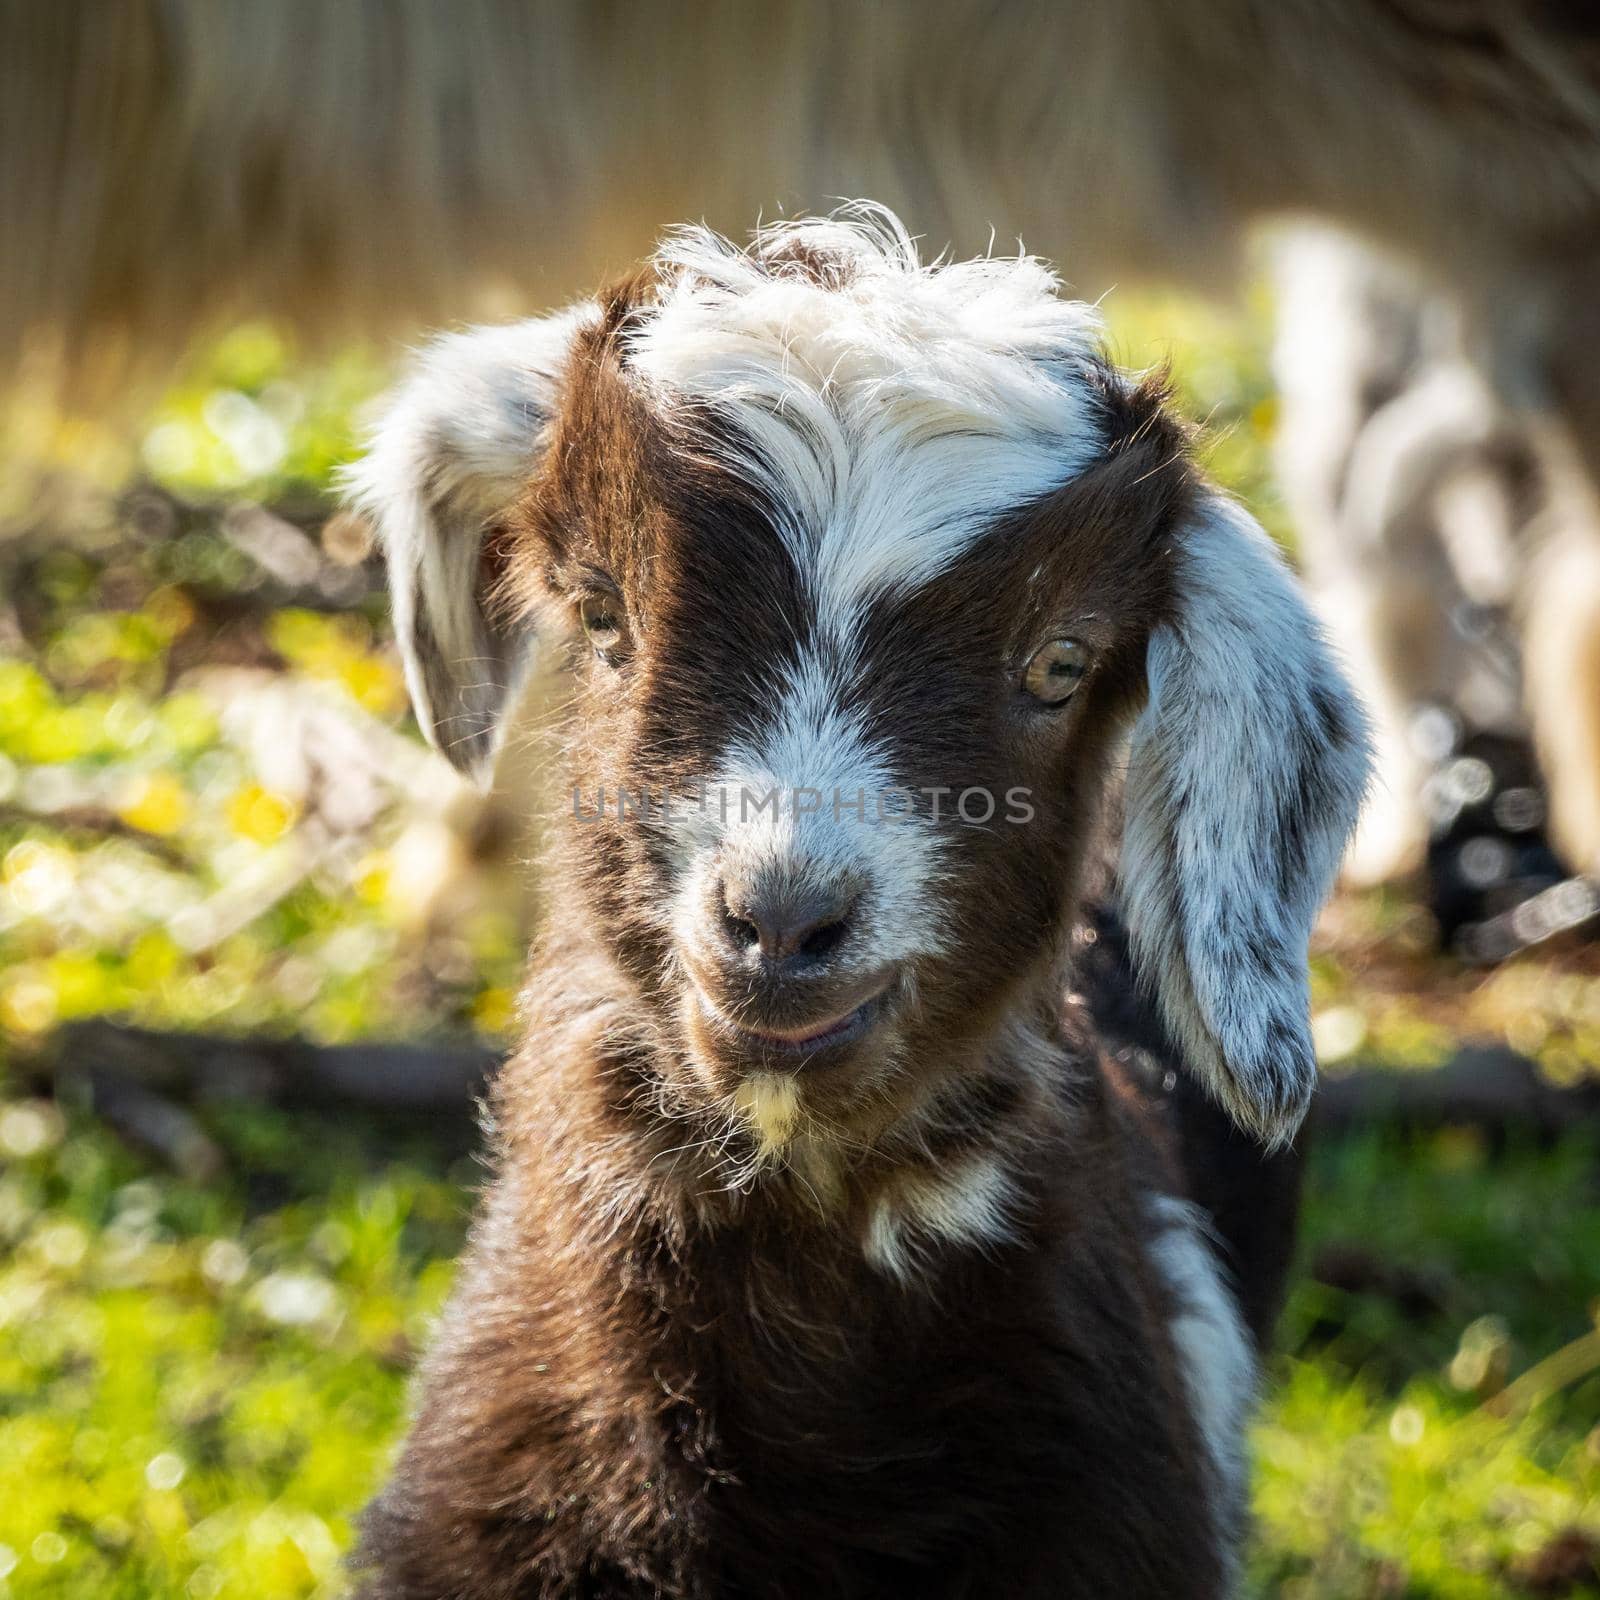 Baby goat portrait by dutourdumonde